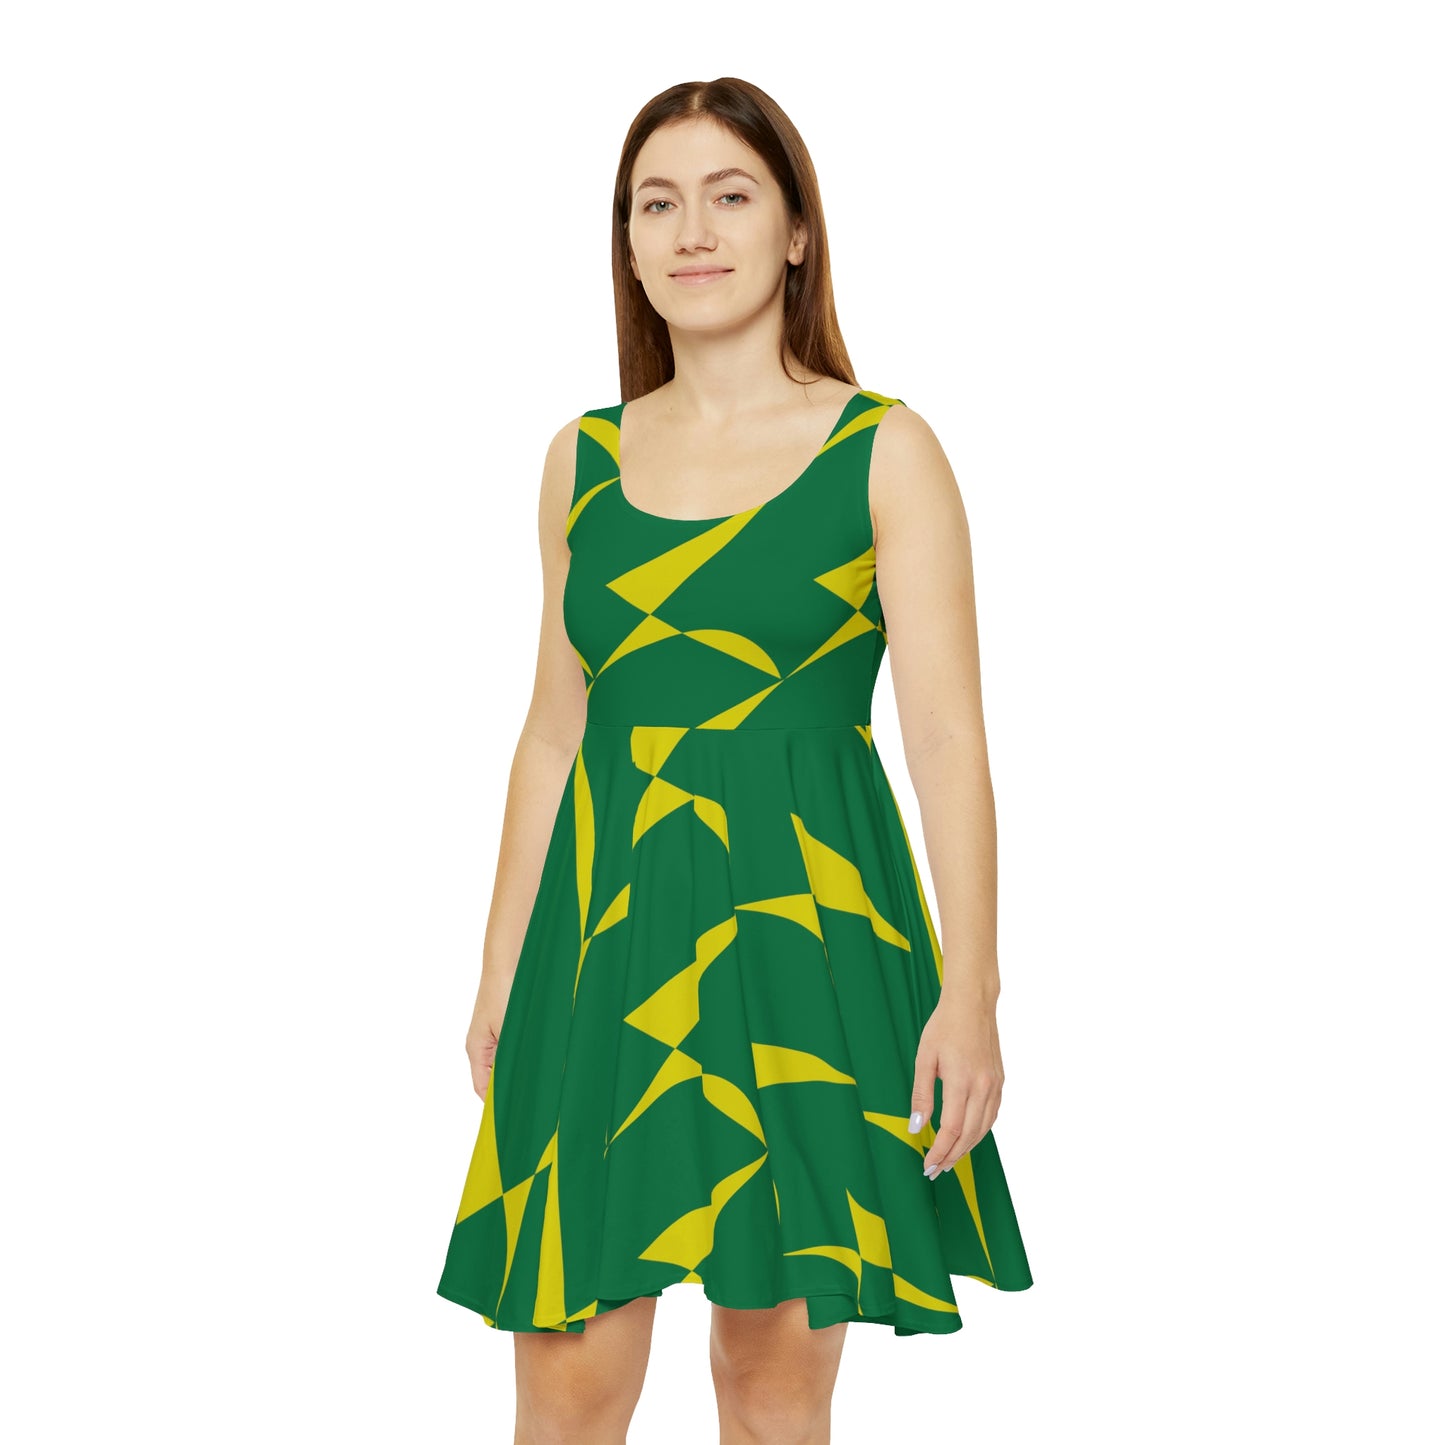 Green And Yellow Skater Dress - Zag Savant